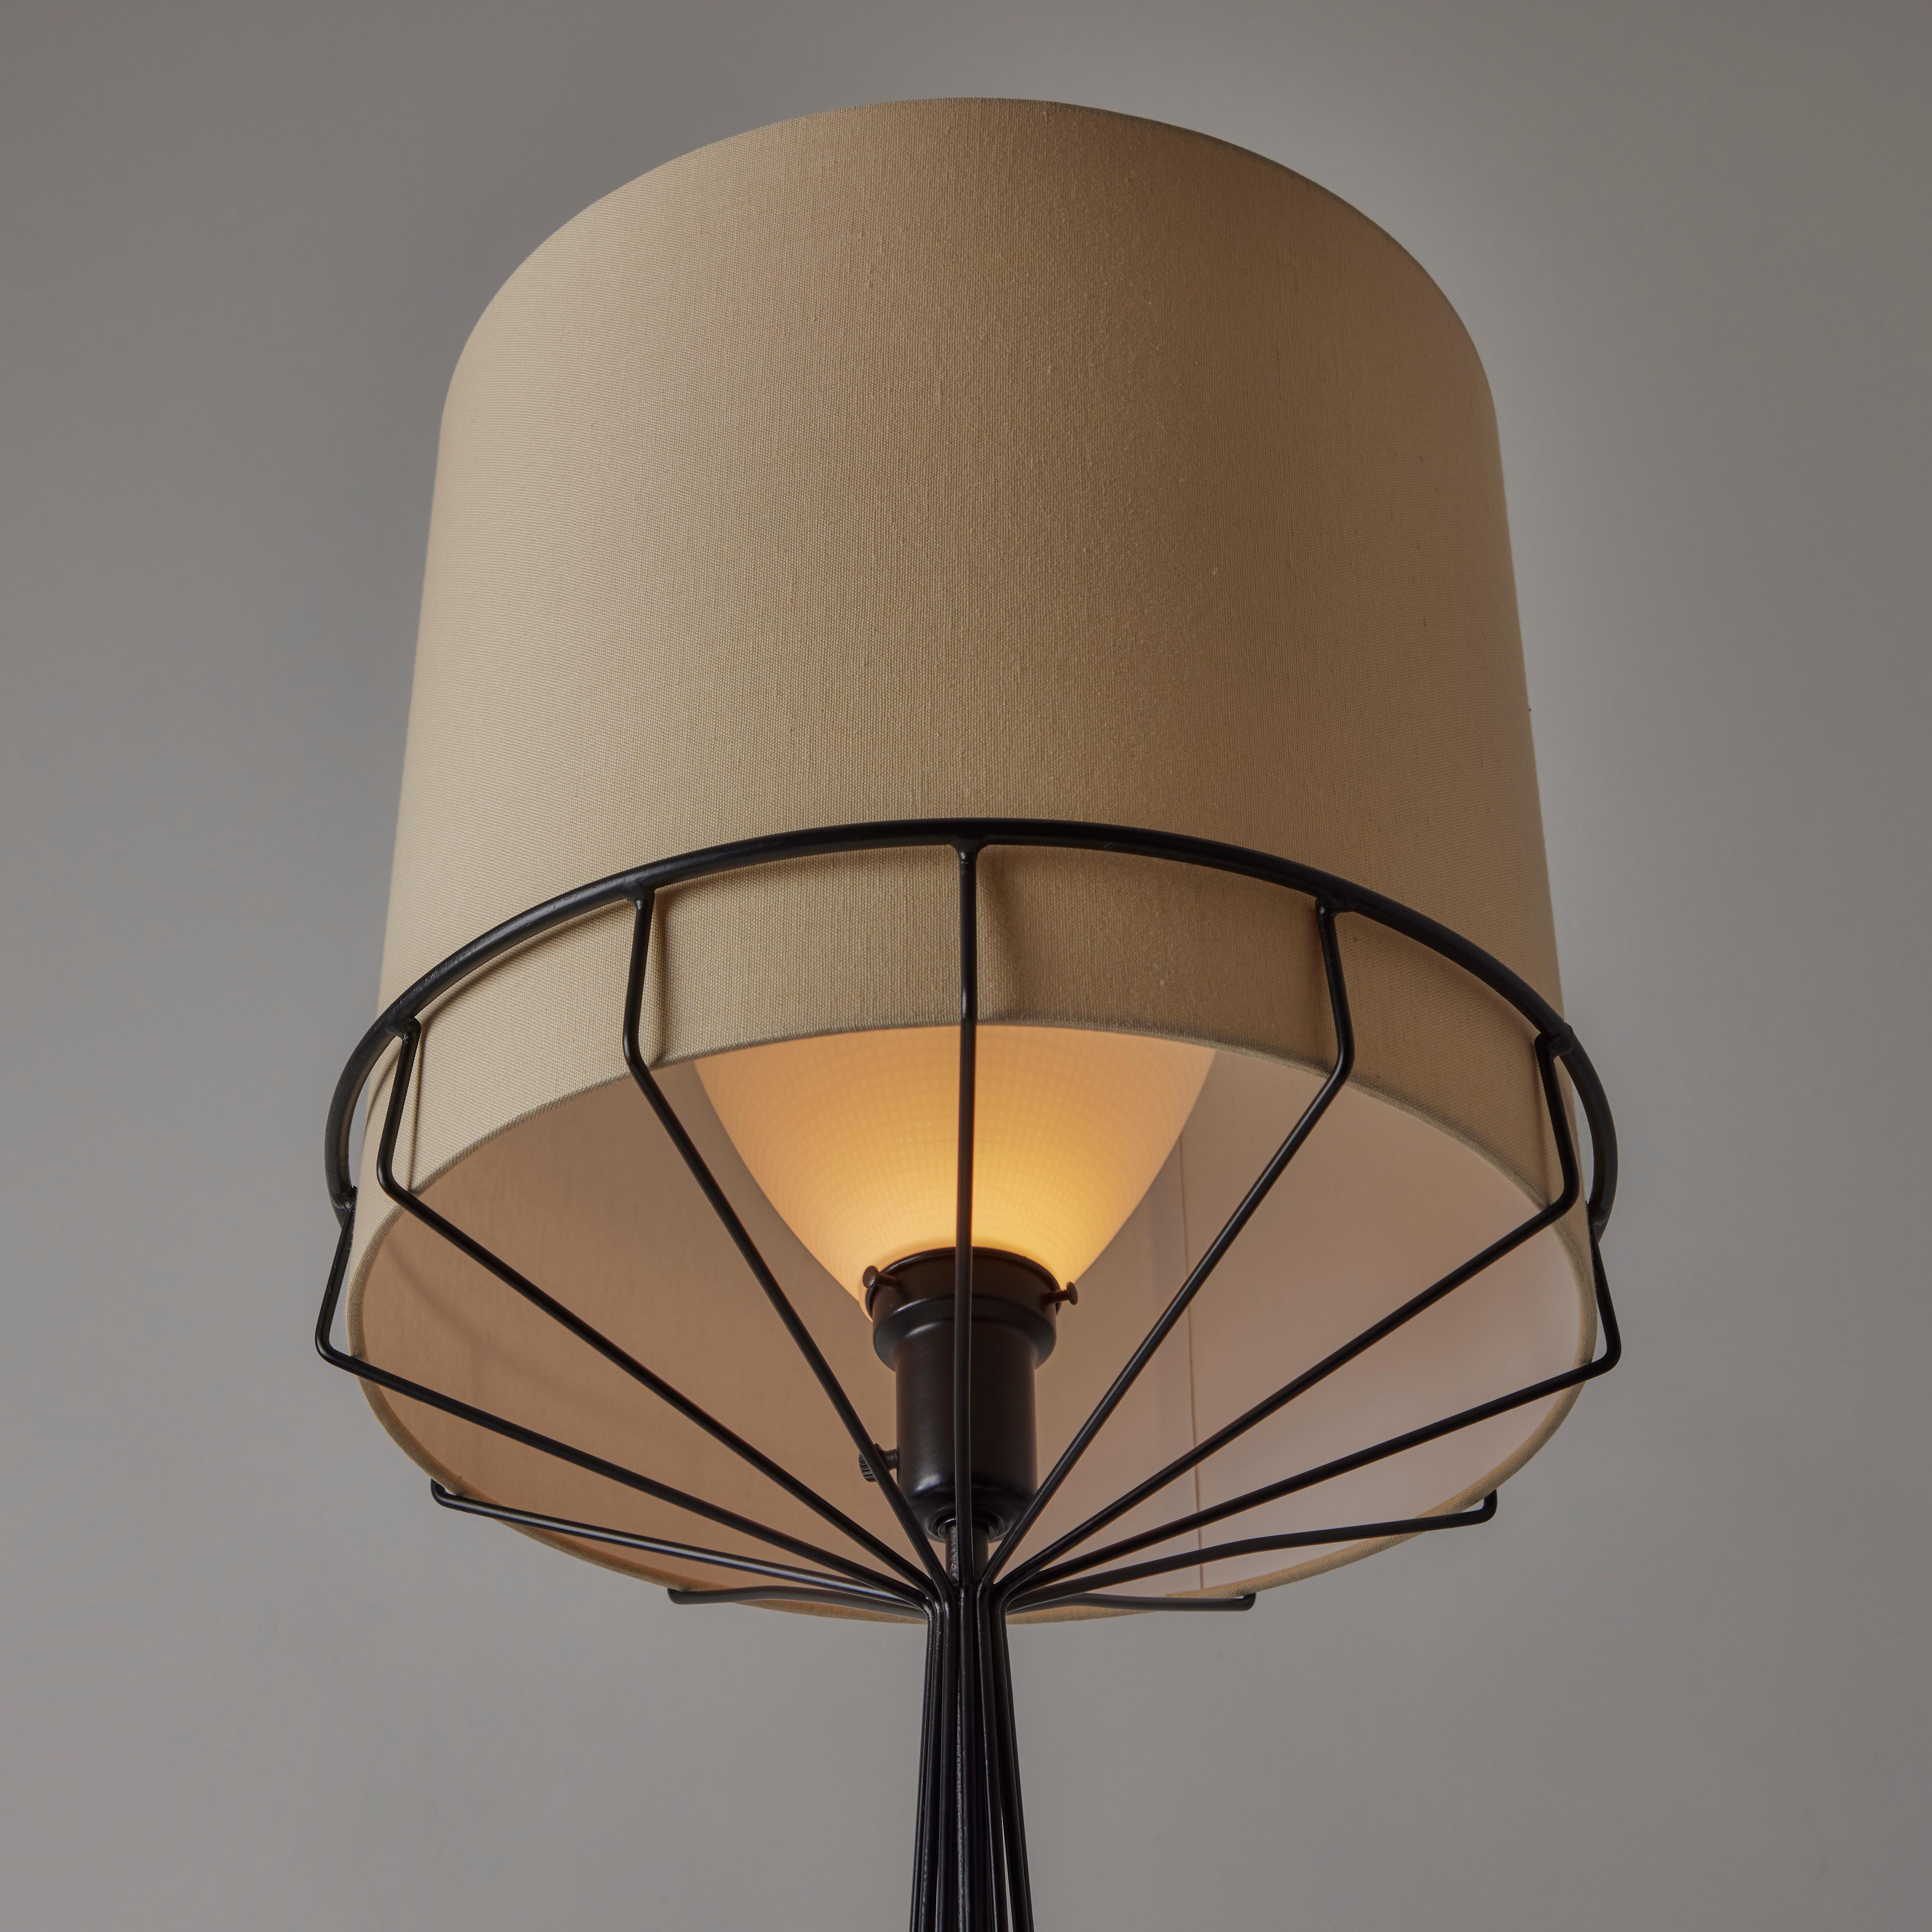 Mid-20th Century Floor Lamp by Tony Paul for The Elton Company 